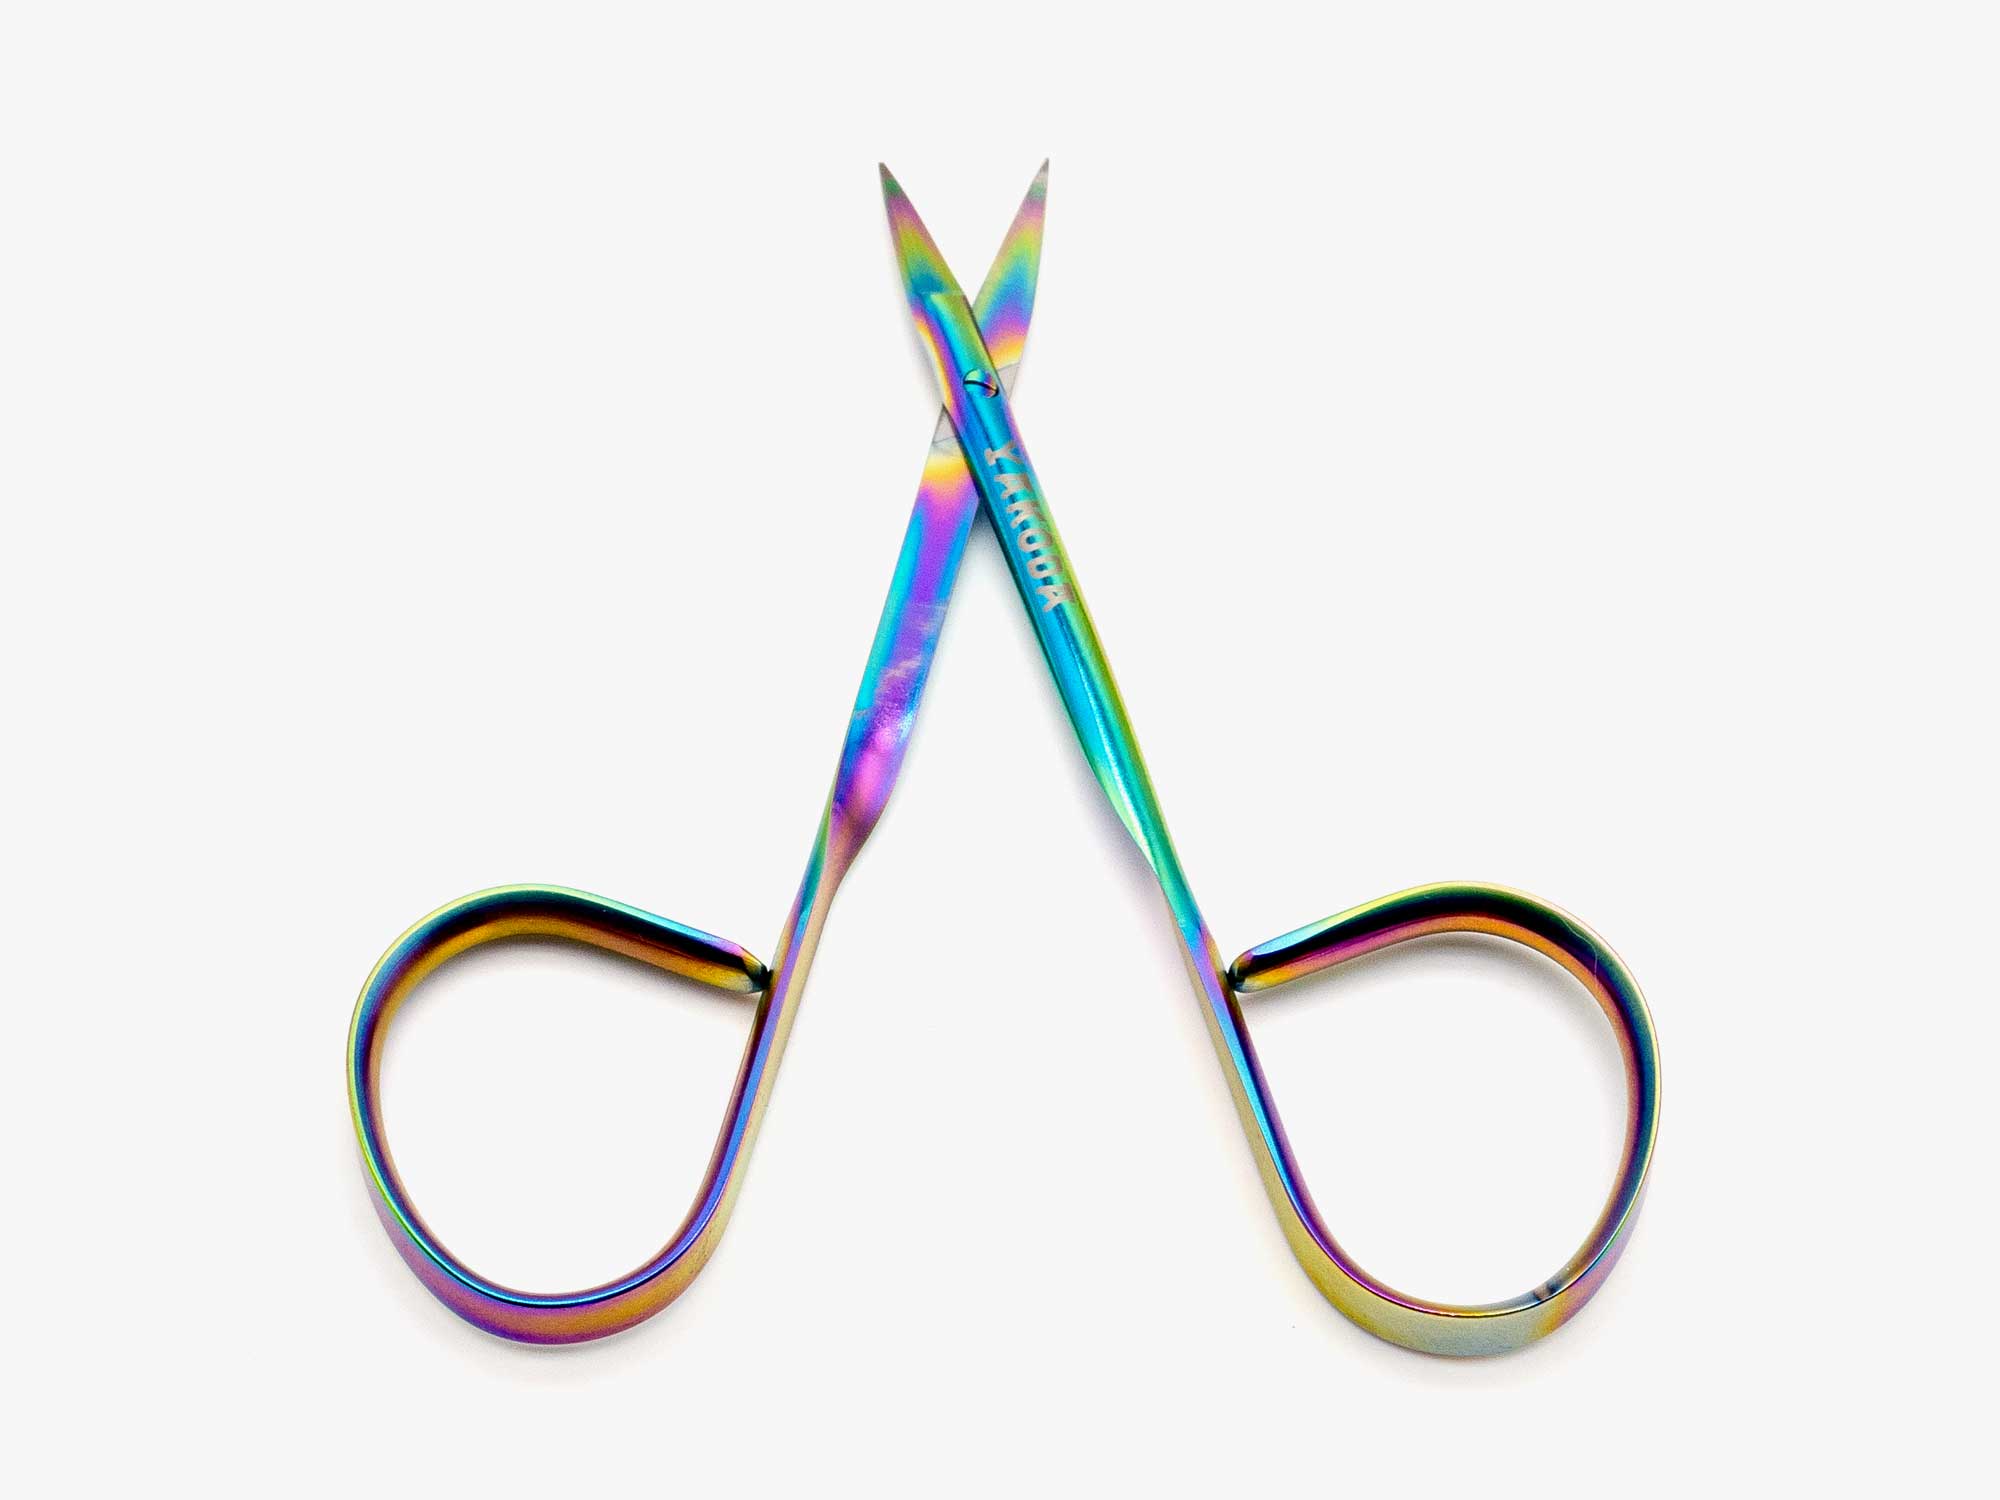 Titanium-Finished Ribbon Scissors